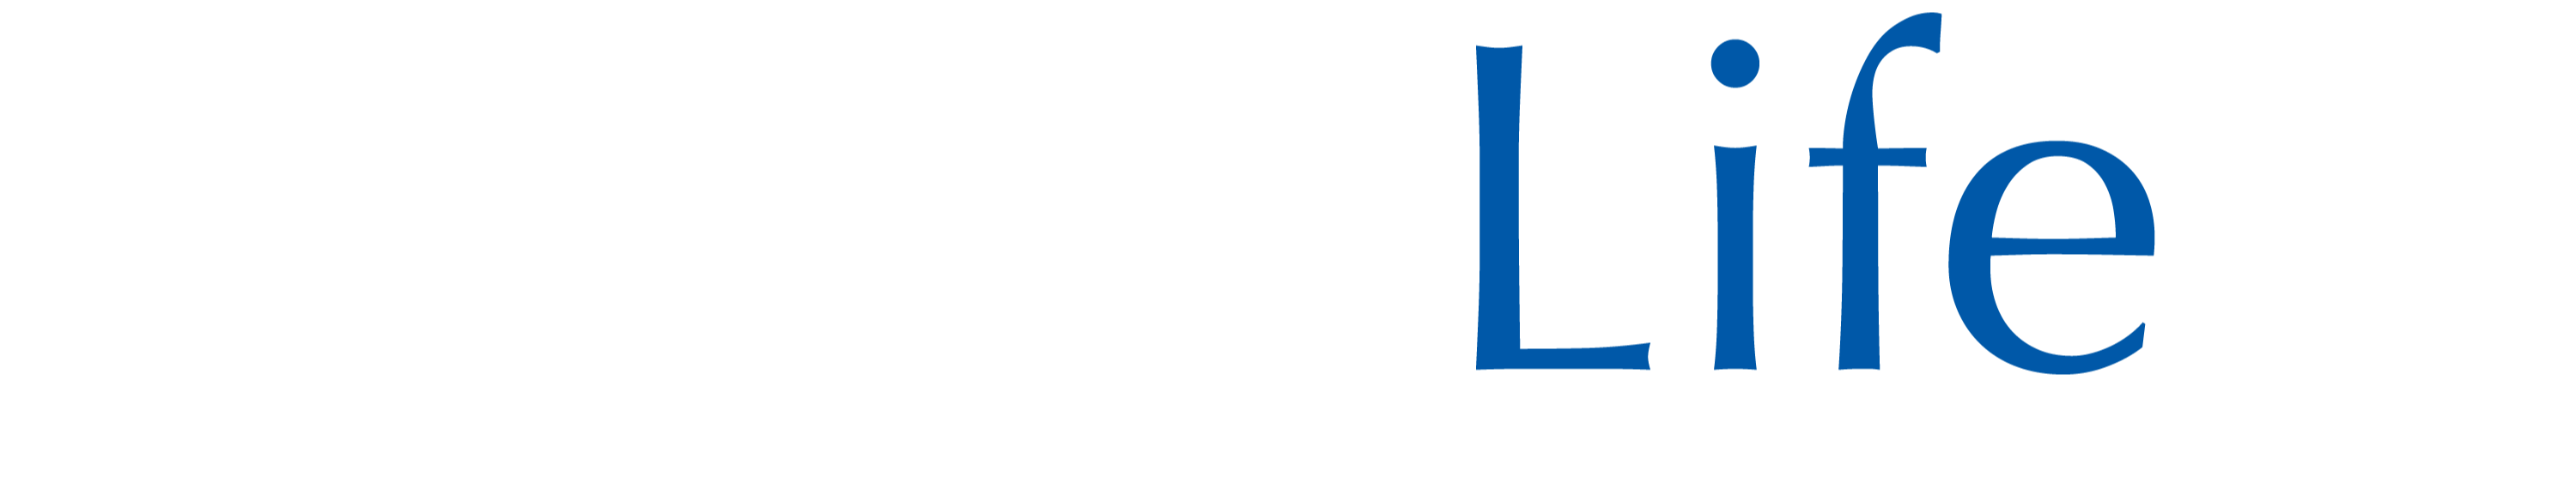 WholeLifeRx_Logo_White